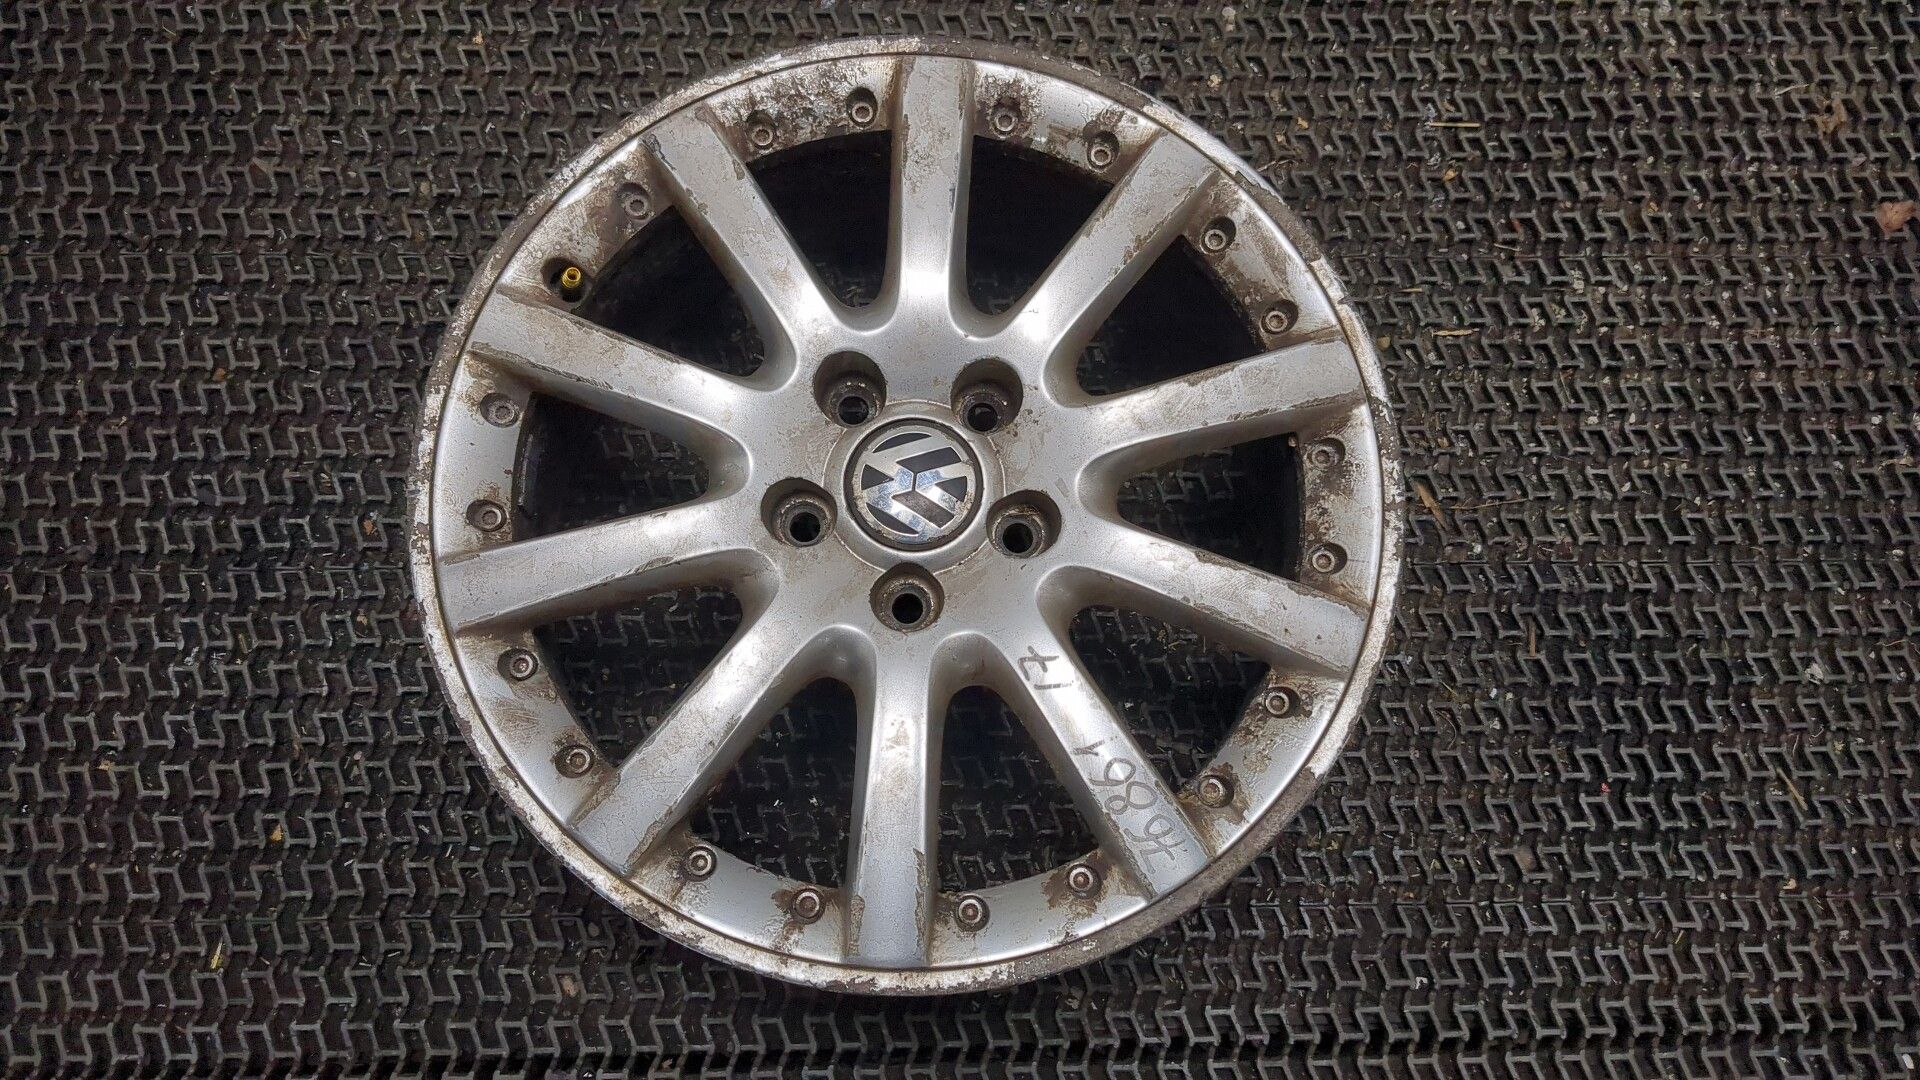 Б/У ориг. 1K0601025K8Z8 Комплект литых дисков Volkswagen Golf 5 2003-2009, 7 57.1, Арт.8468879 царап by3c8489730 Б/У запчасти